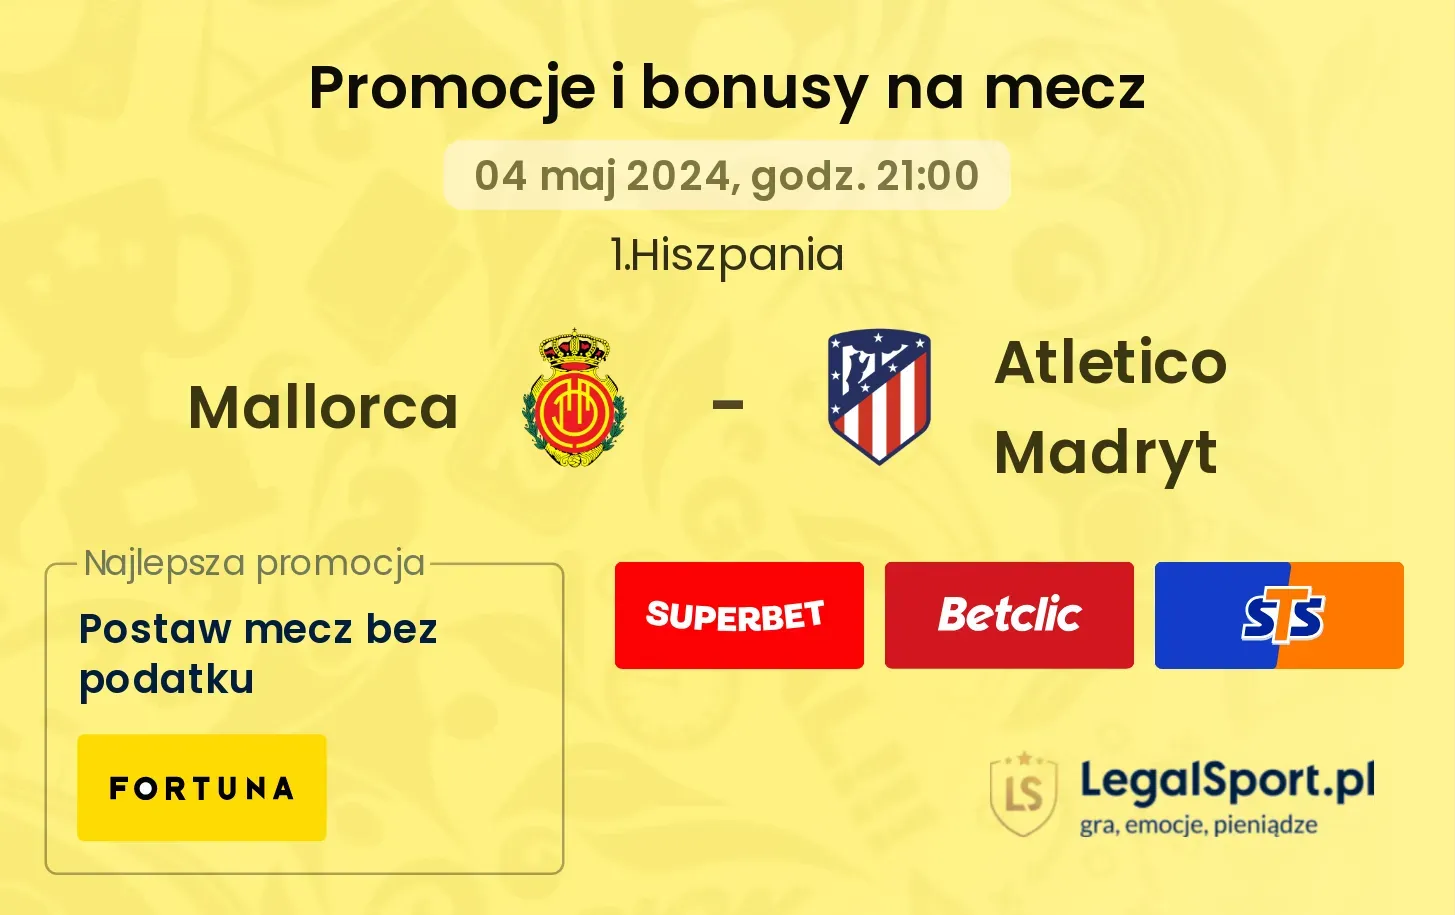 Mallorca - Atletico Madryt promocje bonusy na mecz